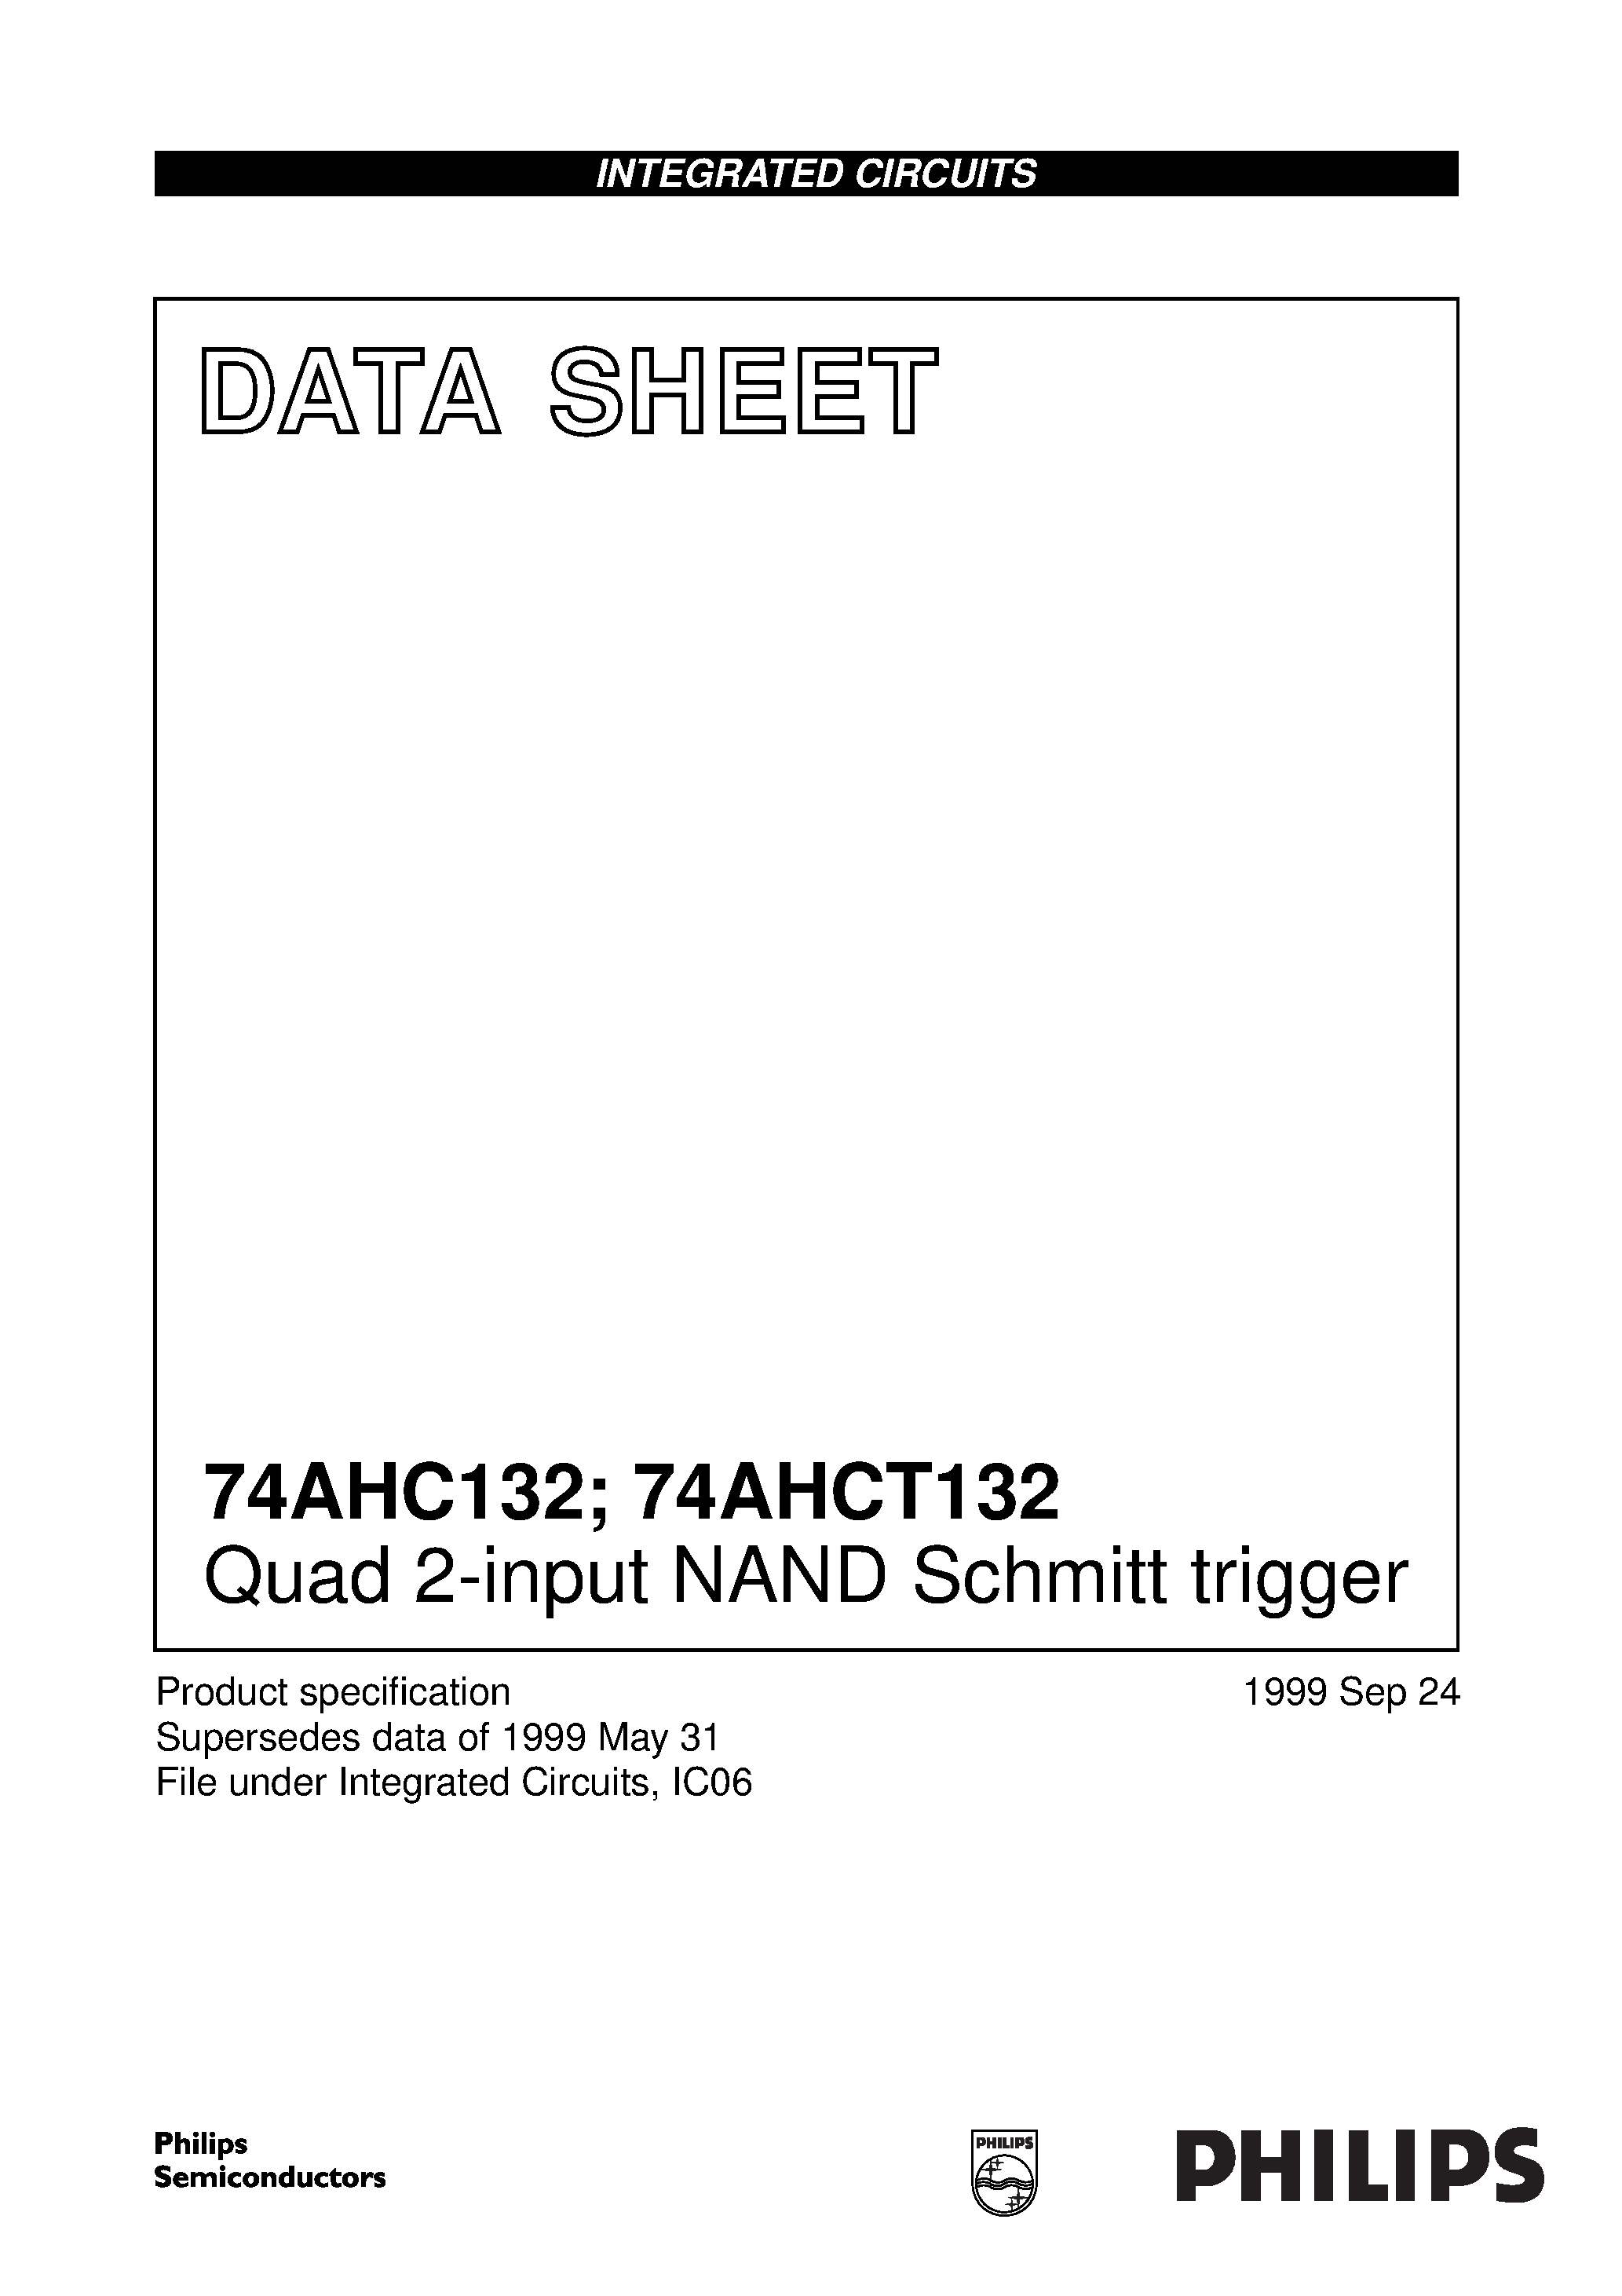 Даташит 74AHC132D - Quad 2-input NAND Schmitt trigger страница 1